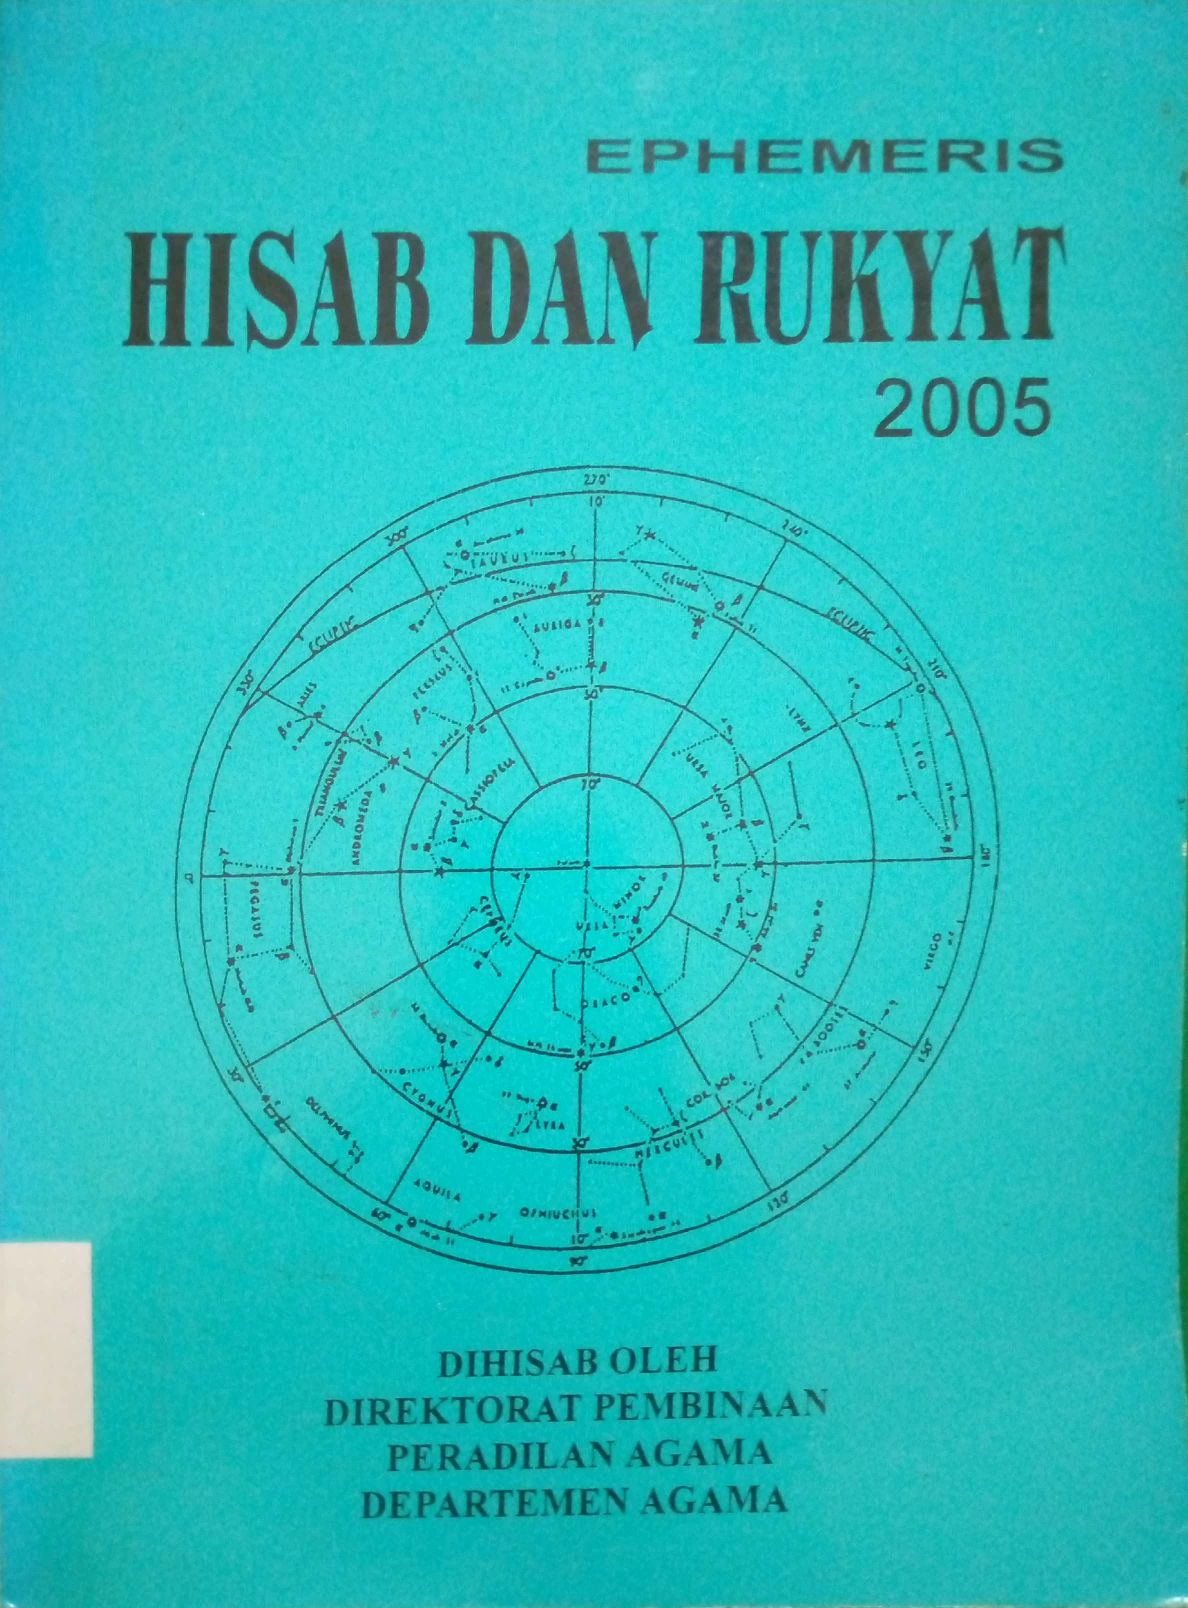 Ephimiris Hisab dan Rukyat 2005